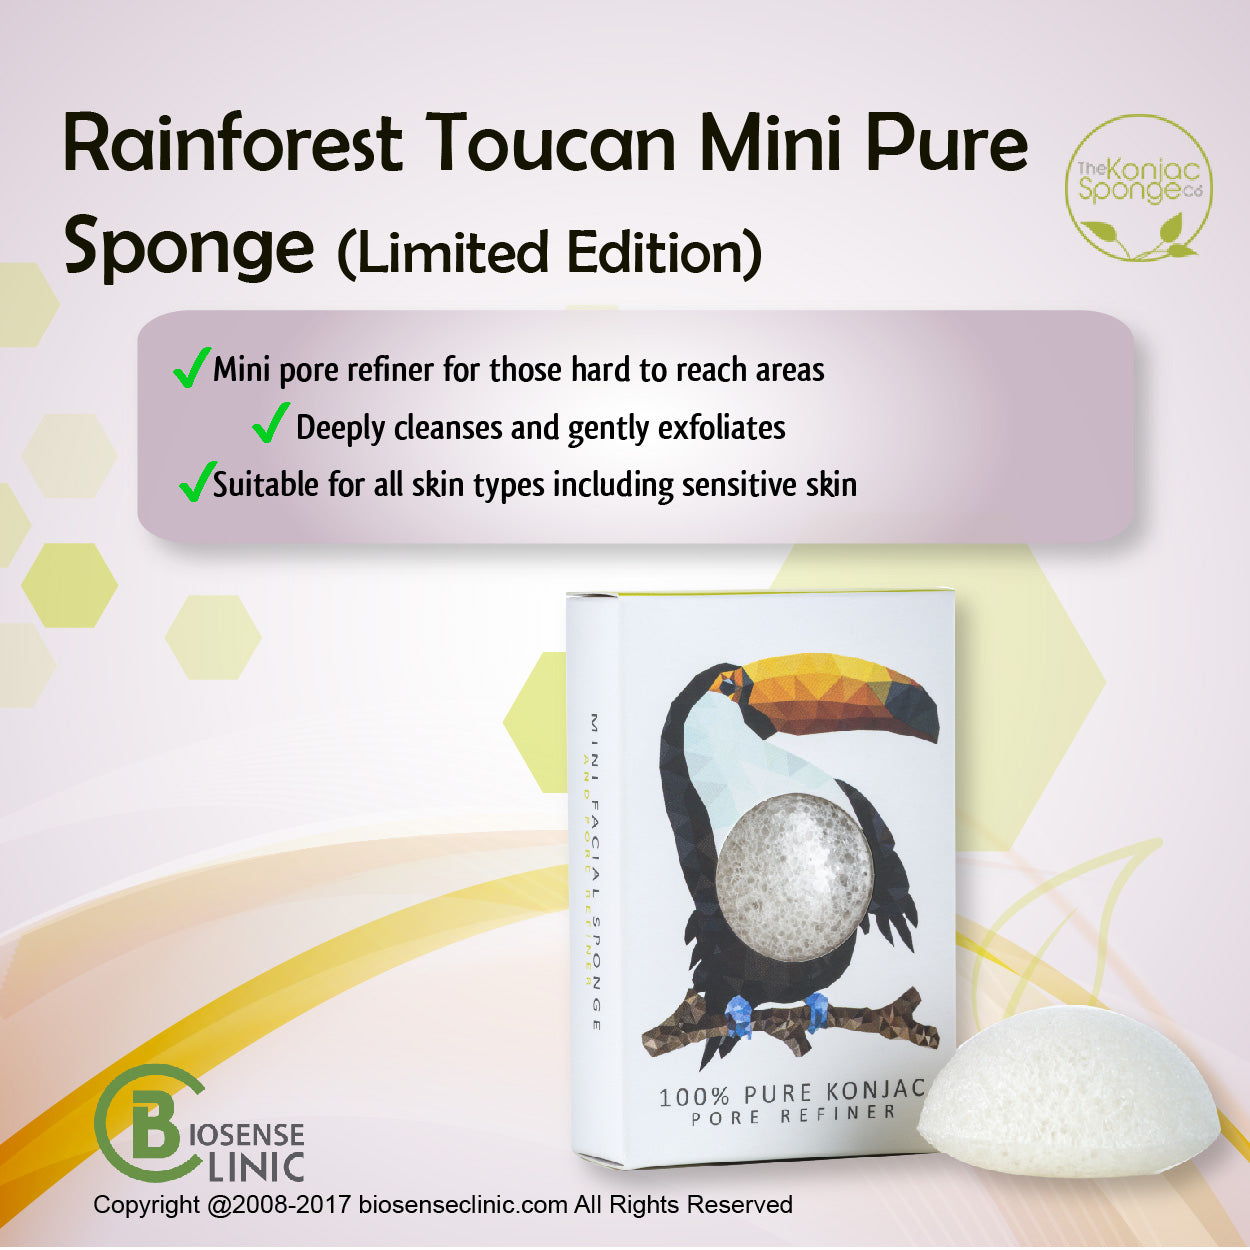 Konjac Mini Pore Refiner Rainforest Toucan mobile banner